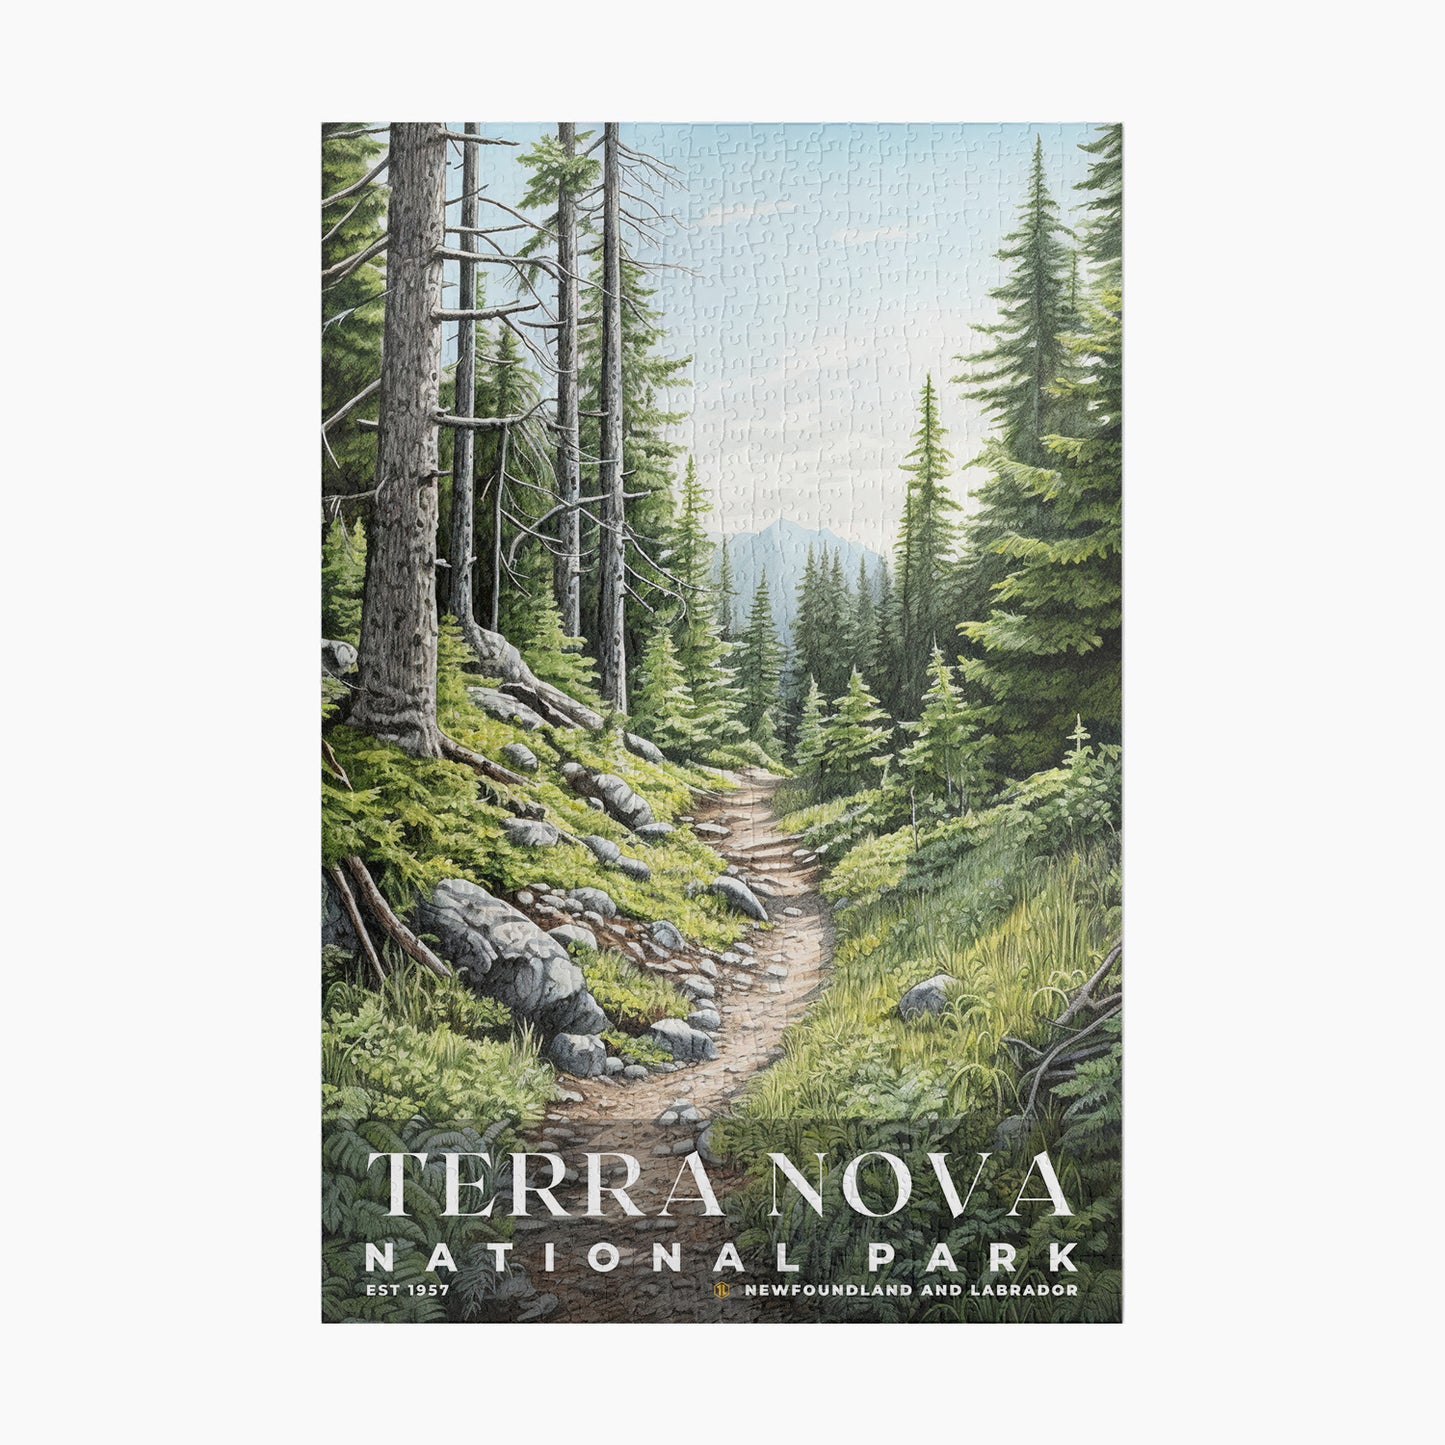 Terra Nova National Park Puzzle | S02